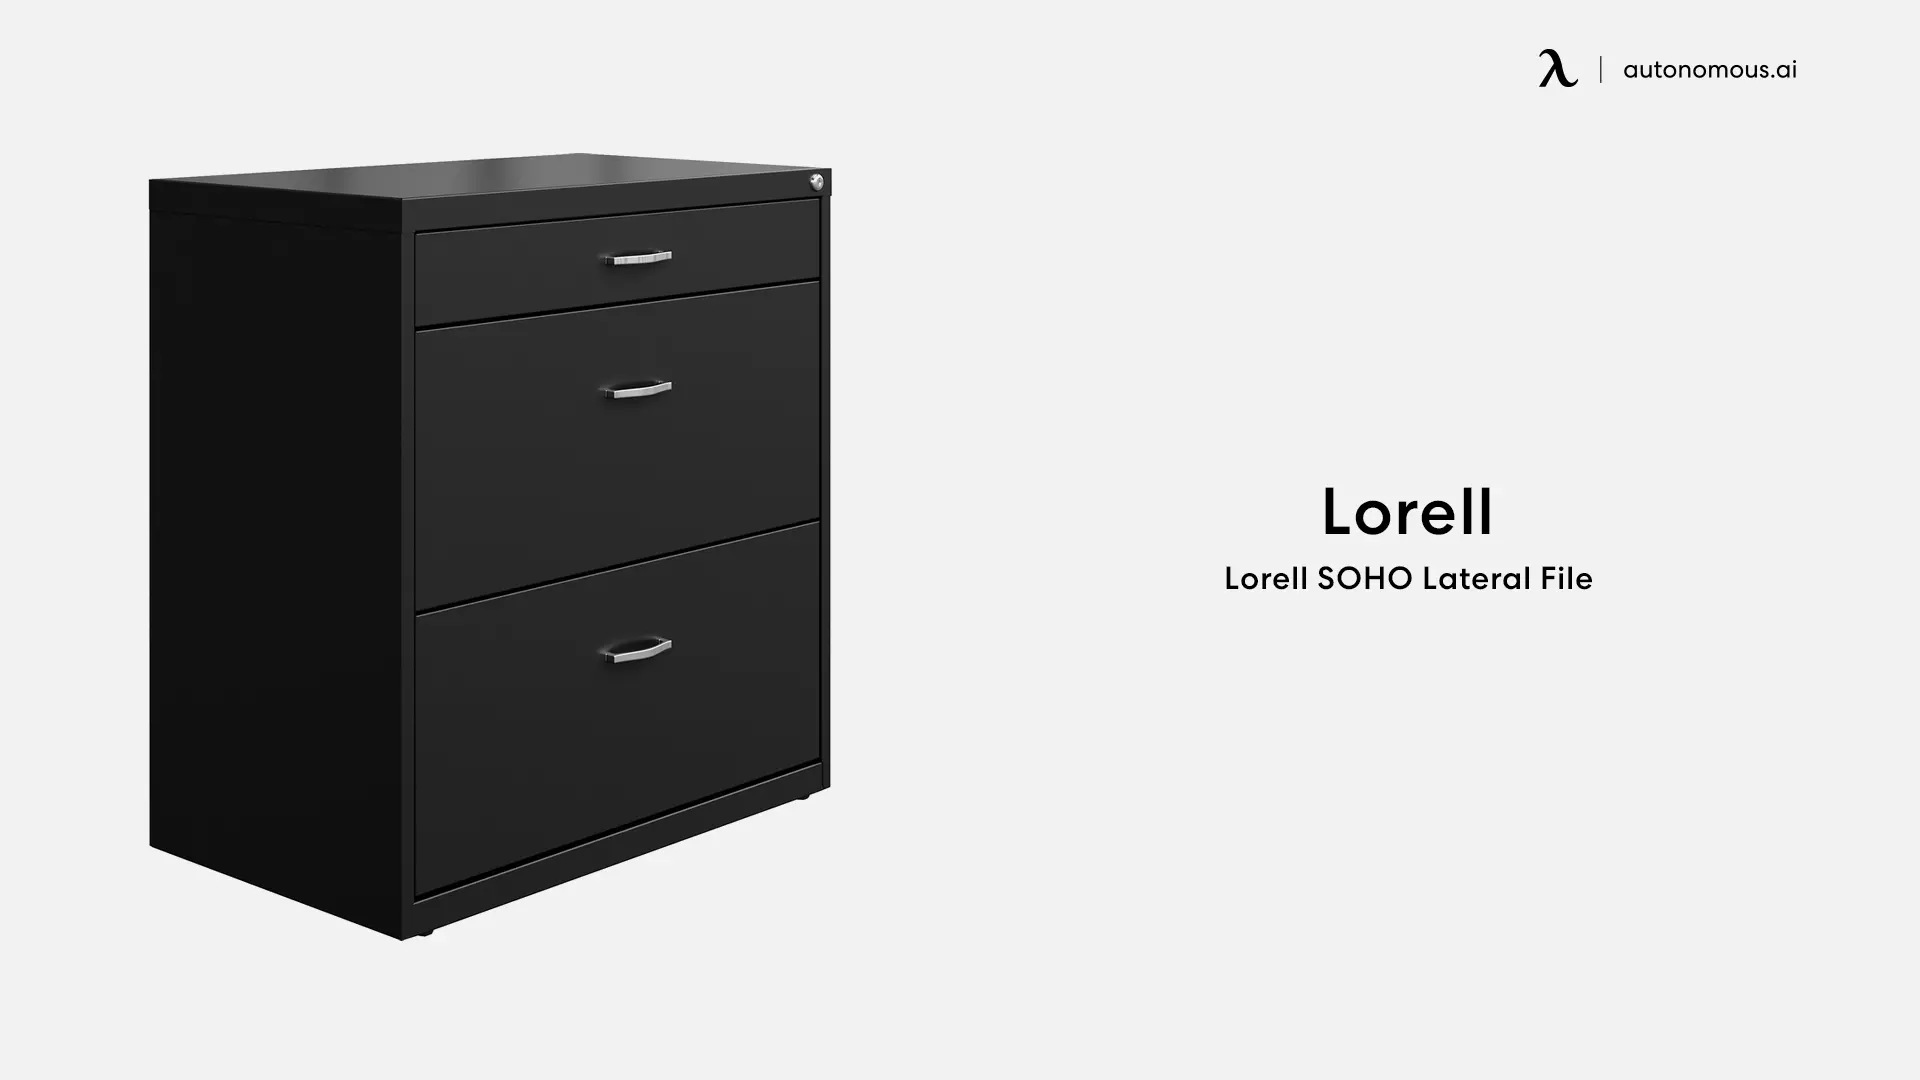 Lorell SOHO Lateral File - black filing cabinet